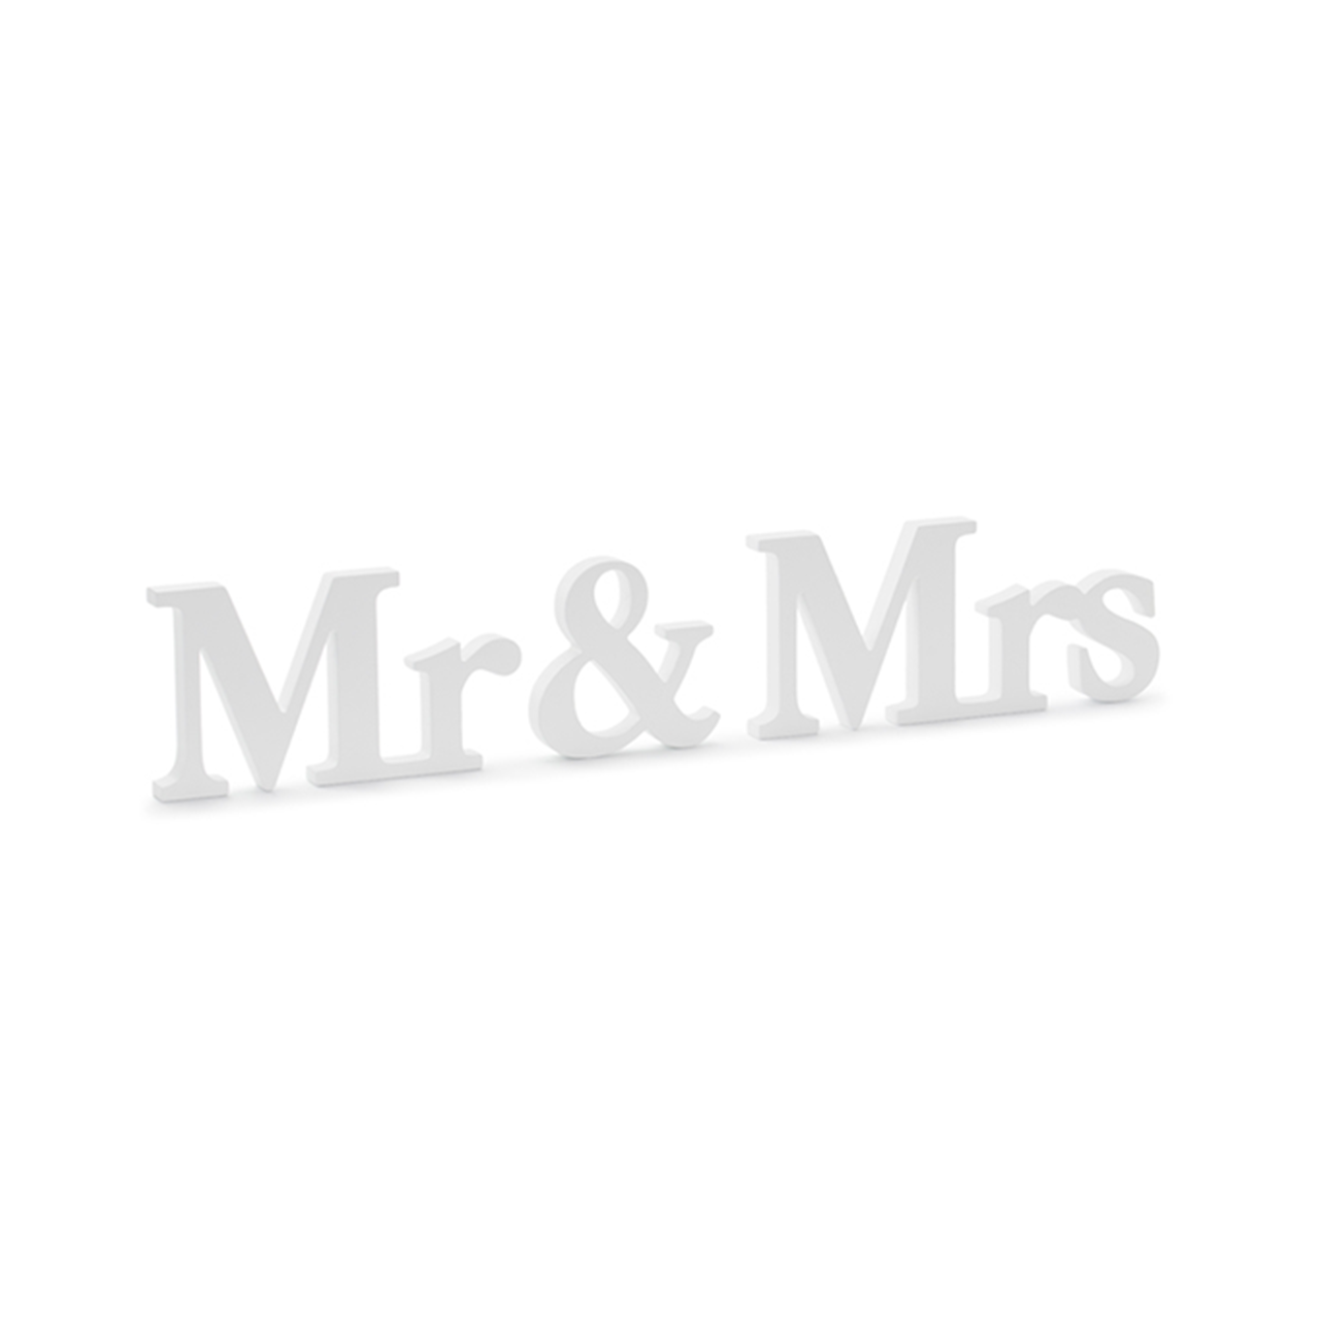 1 Holzdekoration - Mr & Mrs White